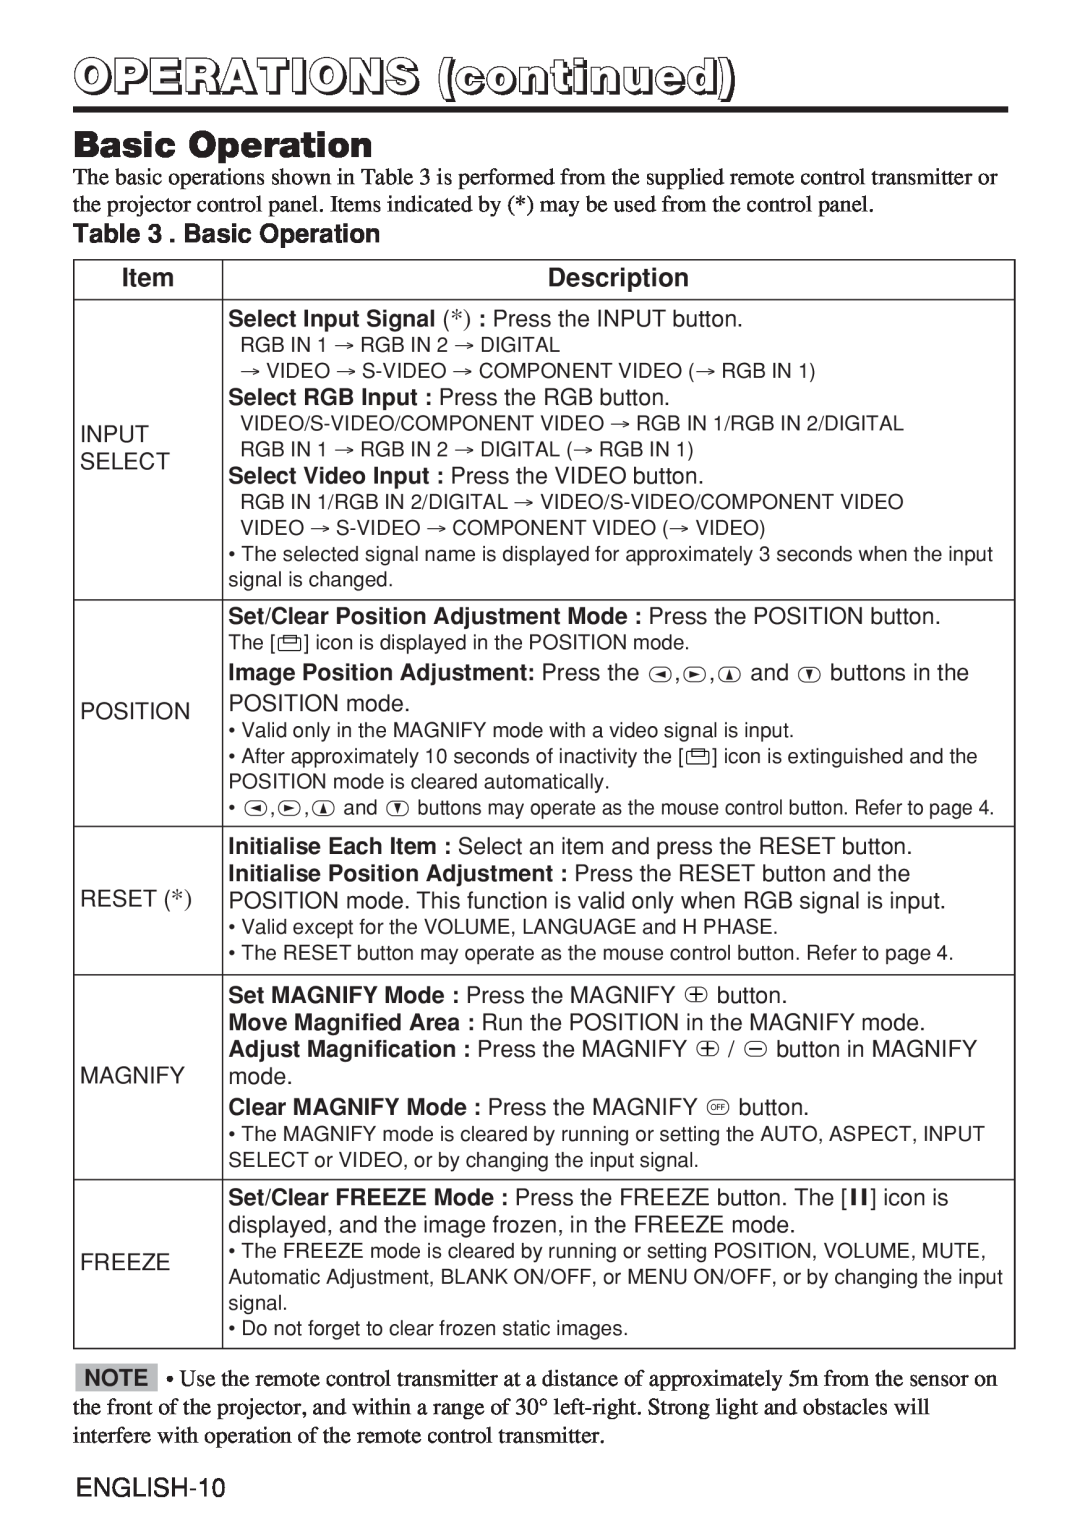 Hitachi CP-X980W user manual OPERATIONS continued, Basic Operation, Description 